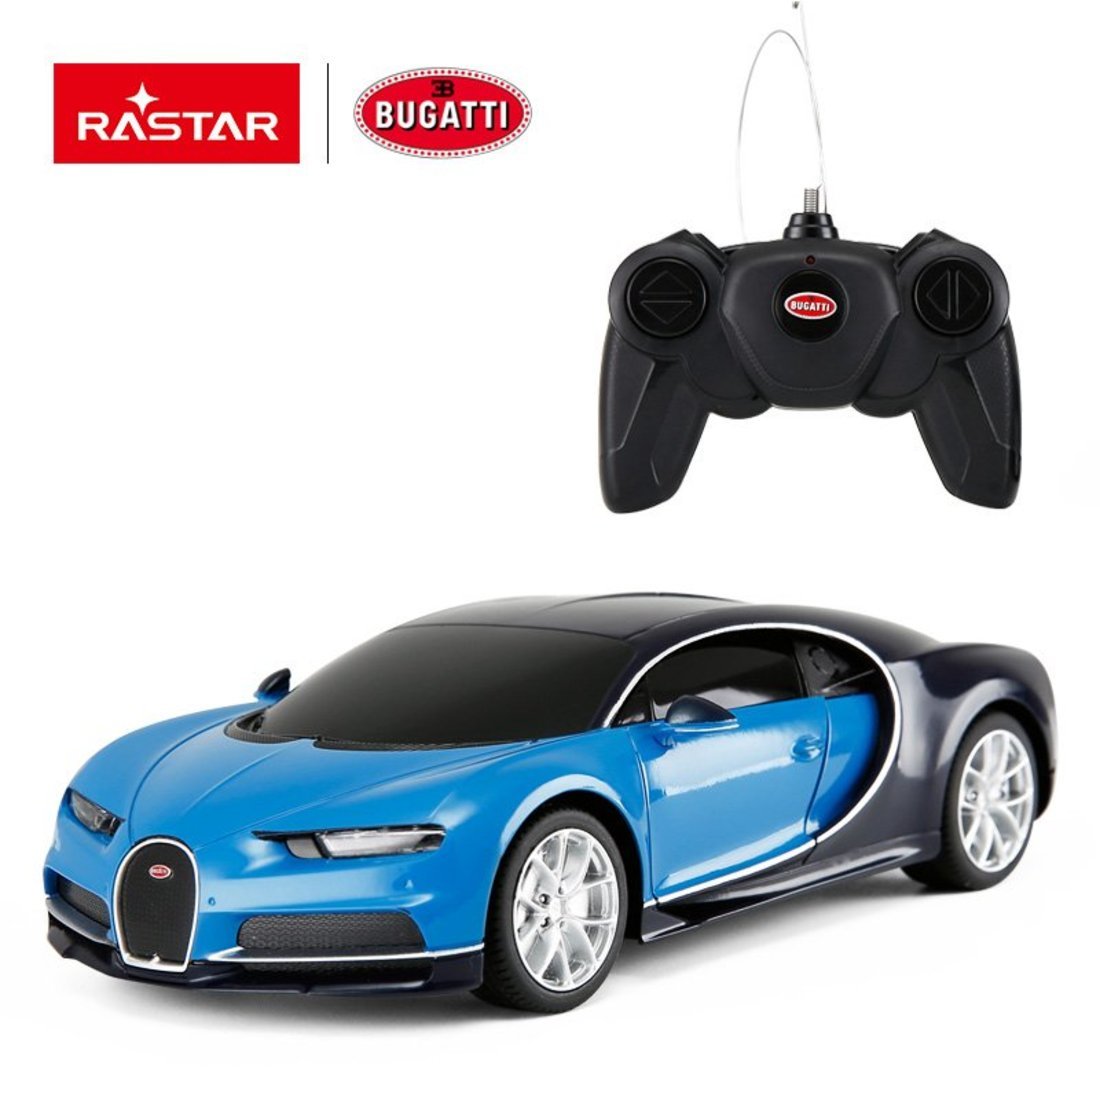 Купить машинку р у. Машина р/у 1:24, Bugatti Chiron. Машинка на радиоуправлении Bugatti Chiron. Машинка Бугатти 1.24 Растар. Радиоуправляемые машины Растар.